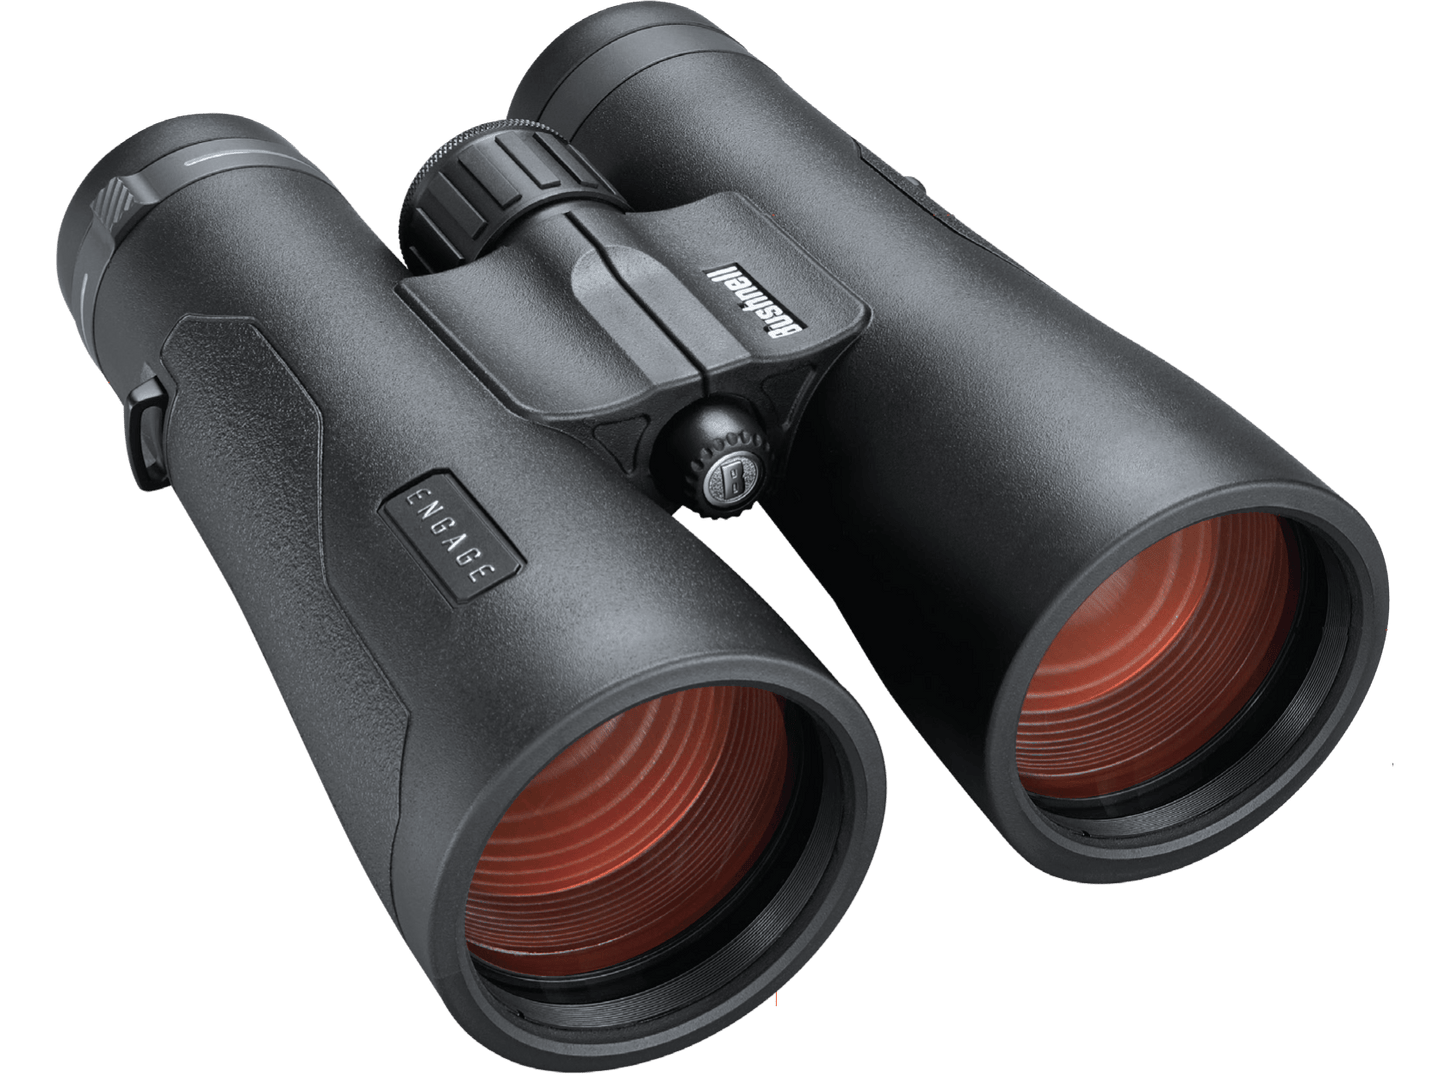 Bushnell 12x50mm Engage™ Binocular - Black Roof Prism ED/FMC/UWB by Texas Fowlers